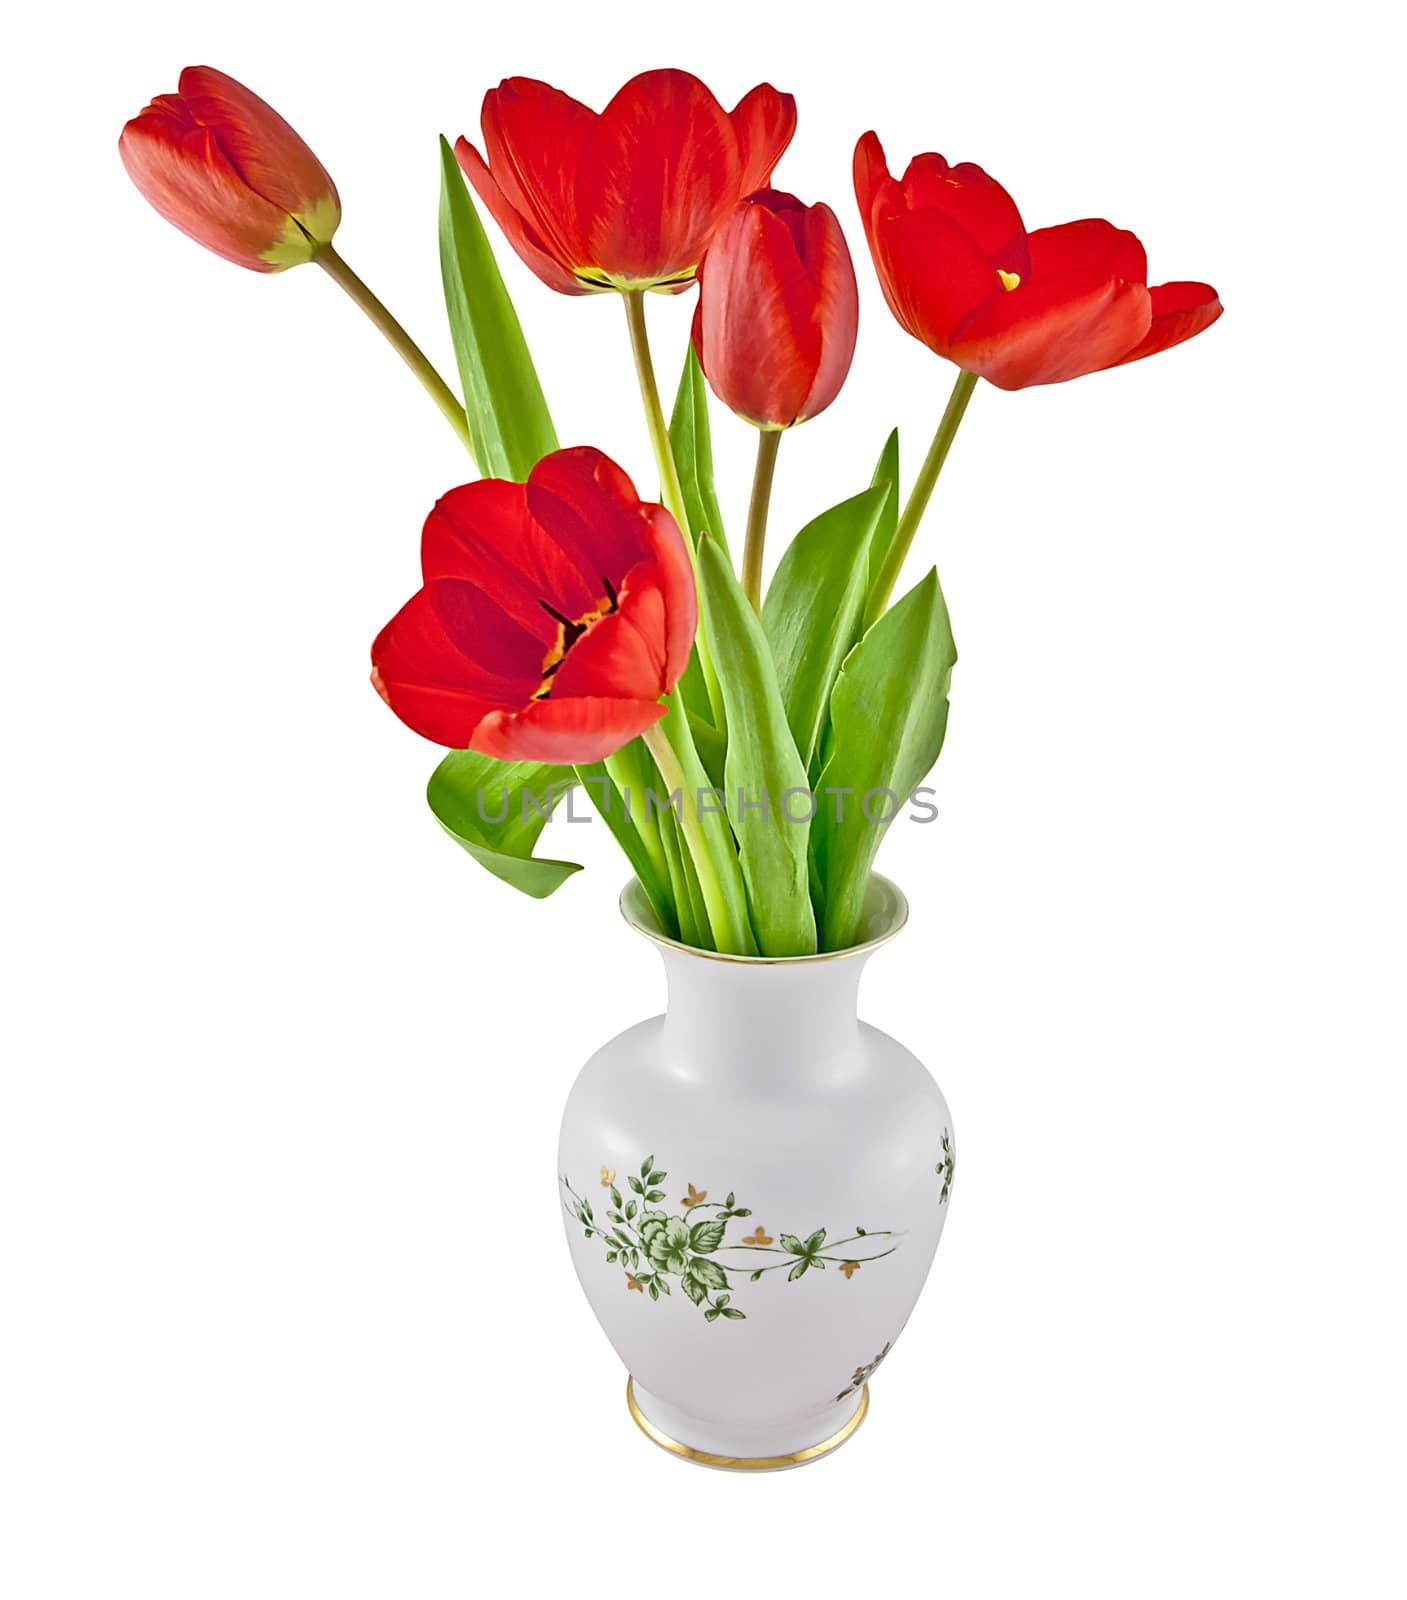 Red tulips by renegadewanderer